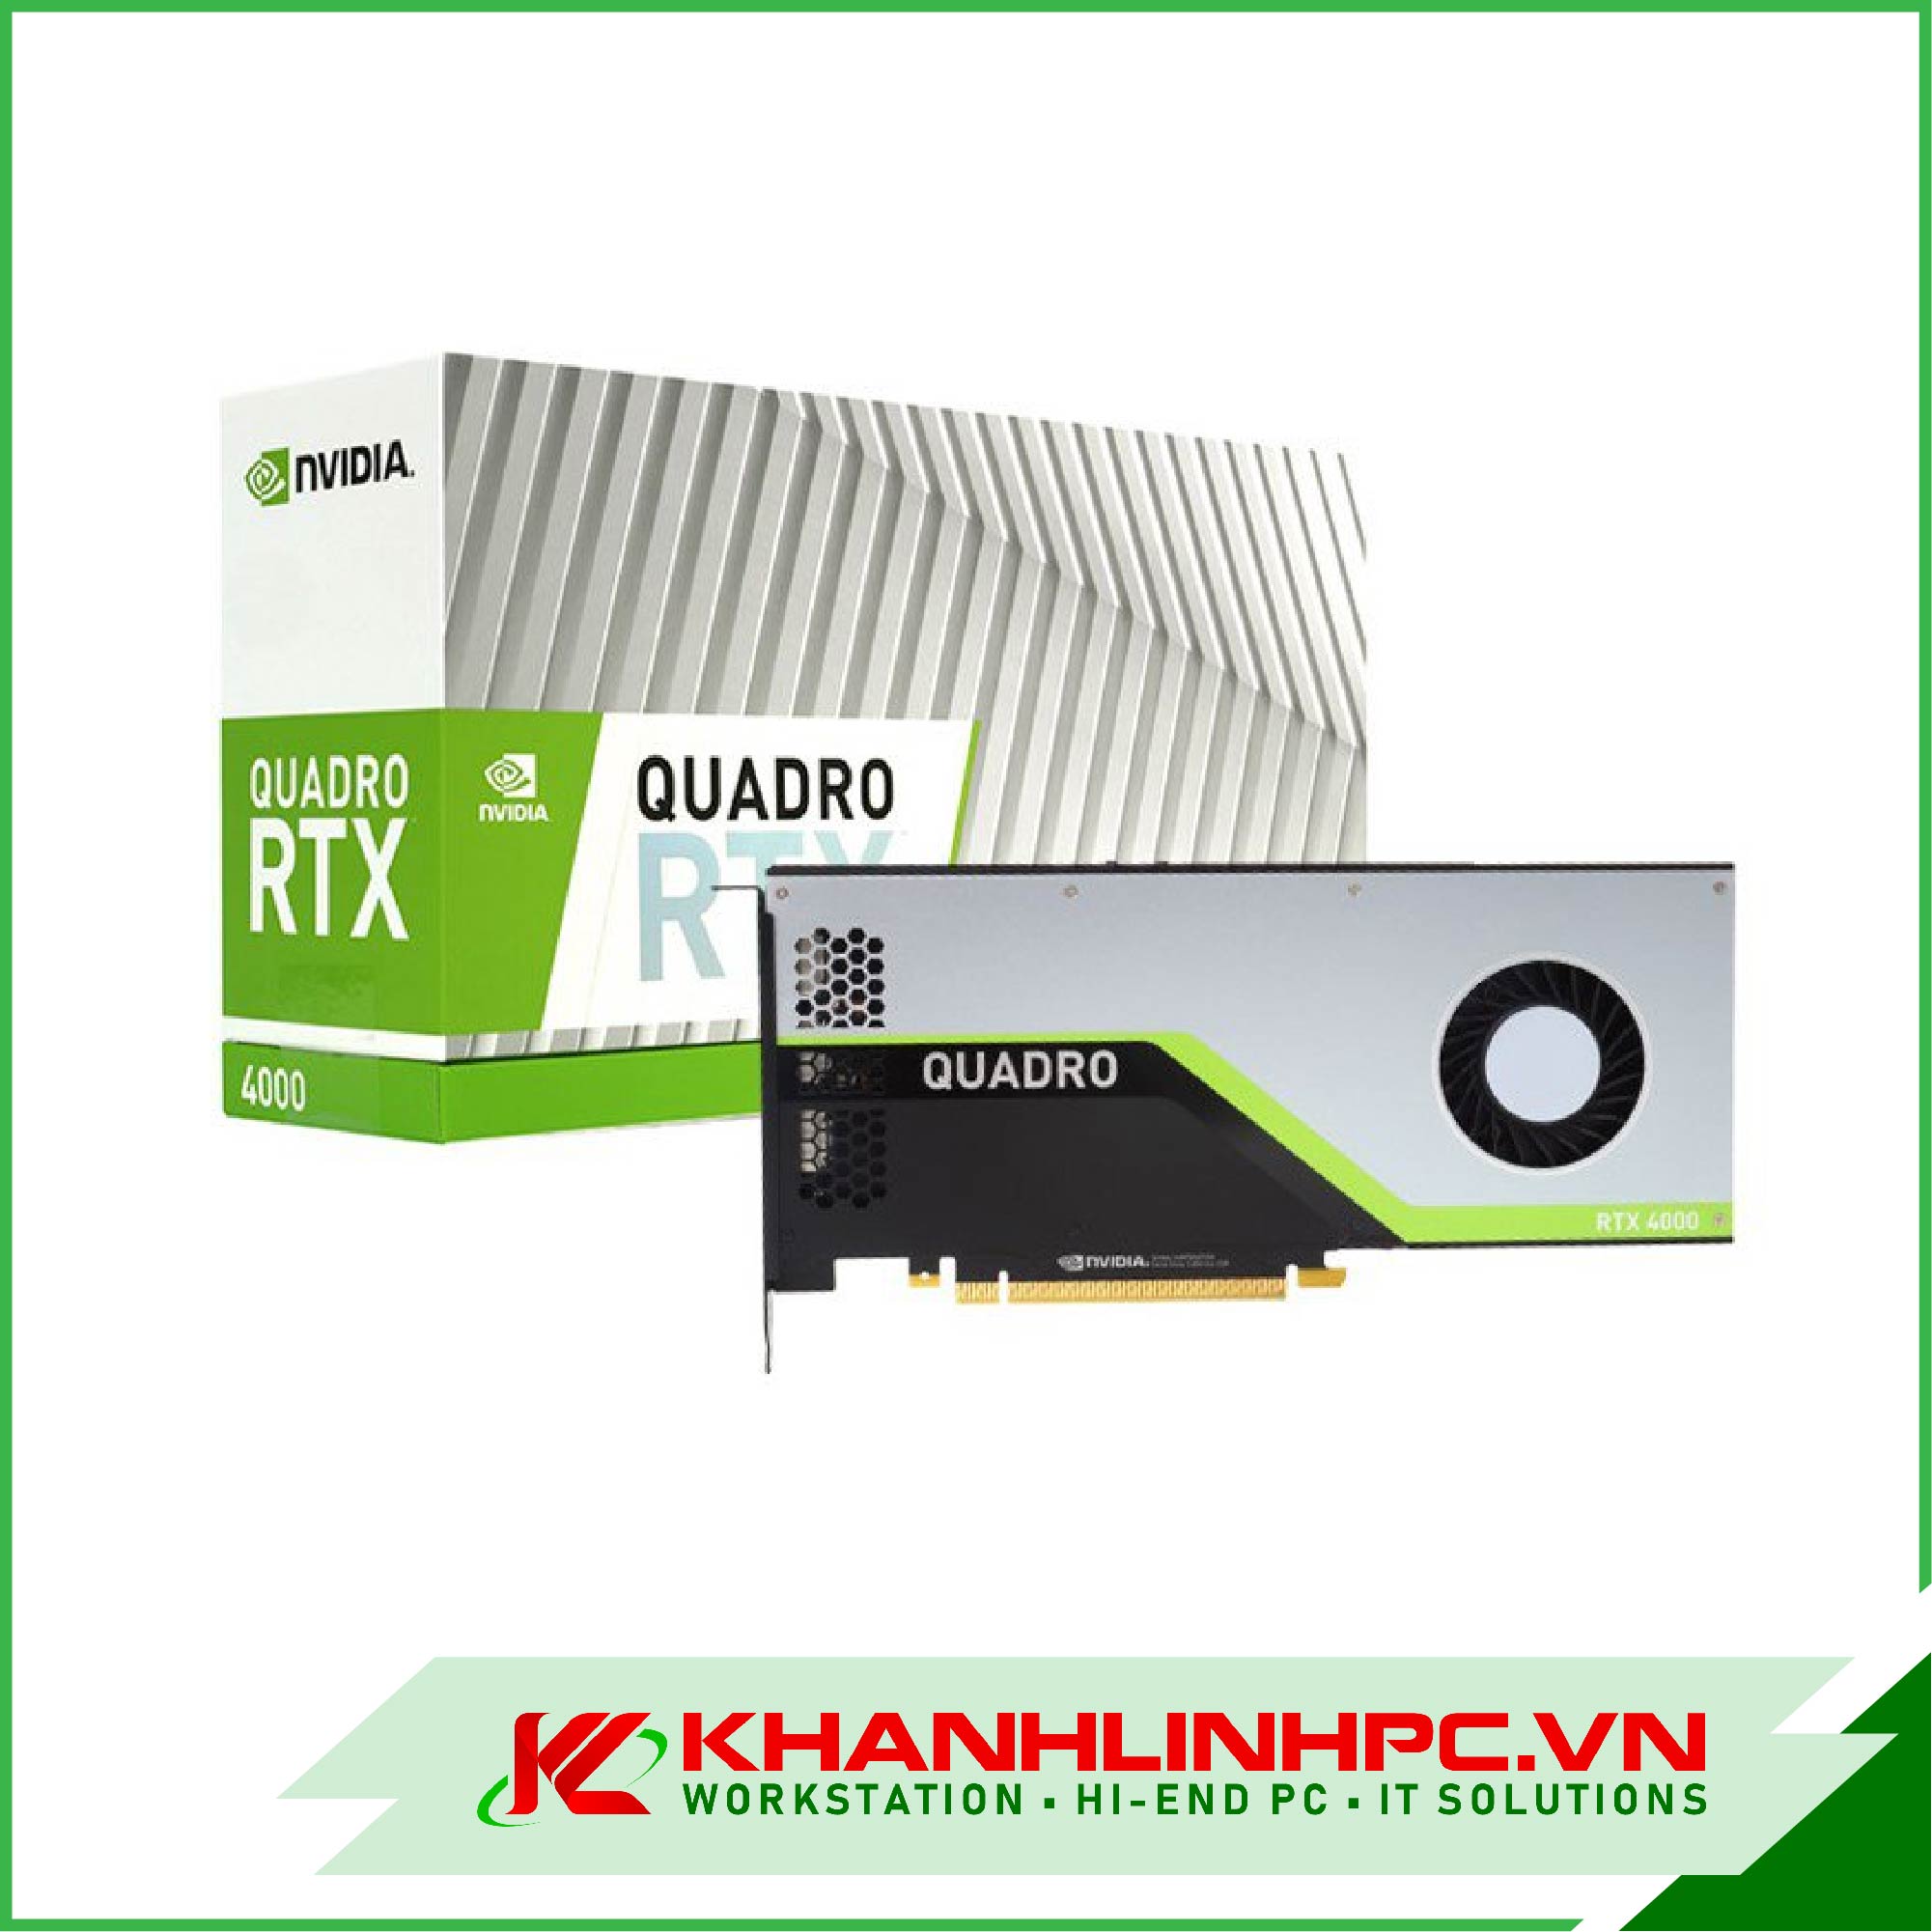 NVIDIA QUADRO RTX 8GB 4000